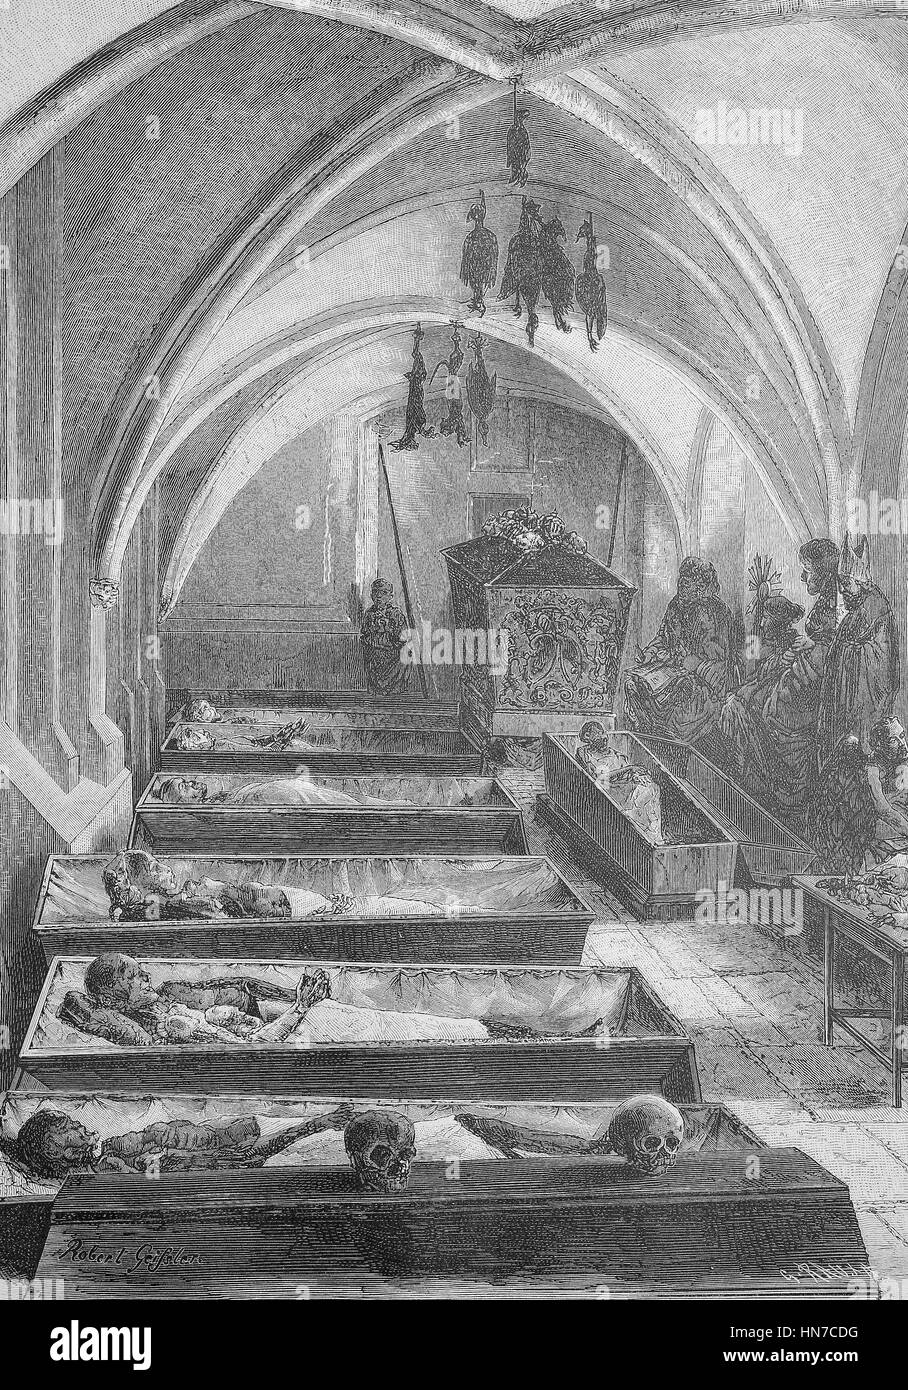 the mummies in the basement of the Cathedral of Bremen, Germany, called Bleikeller, Der Bleikeller im Dom von Bremen mit Mumien, woodcut from 1885, digital improved Stock Photo